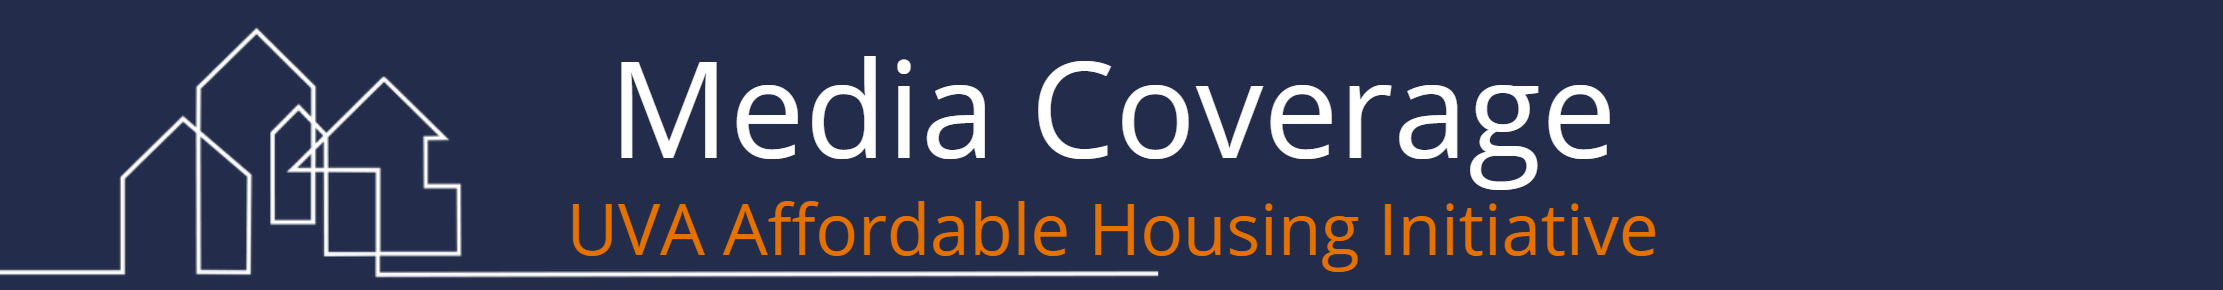 Media Coverage, UVA Affordable Housing Initiative